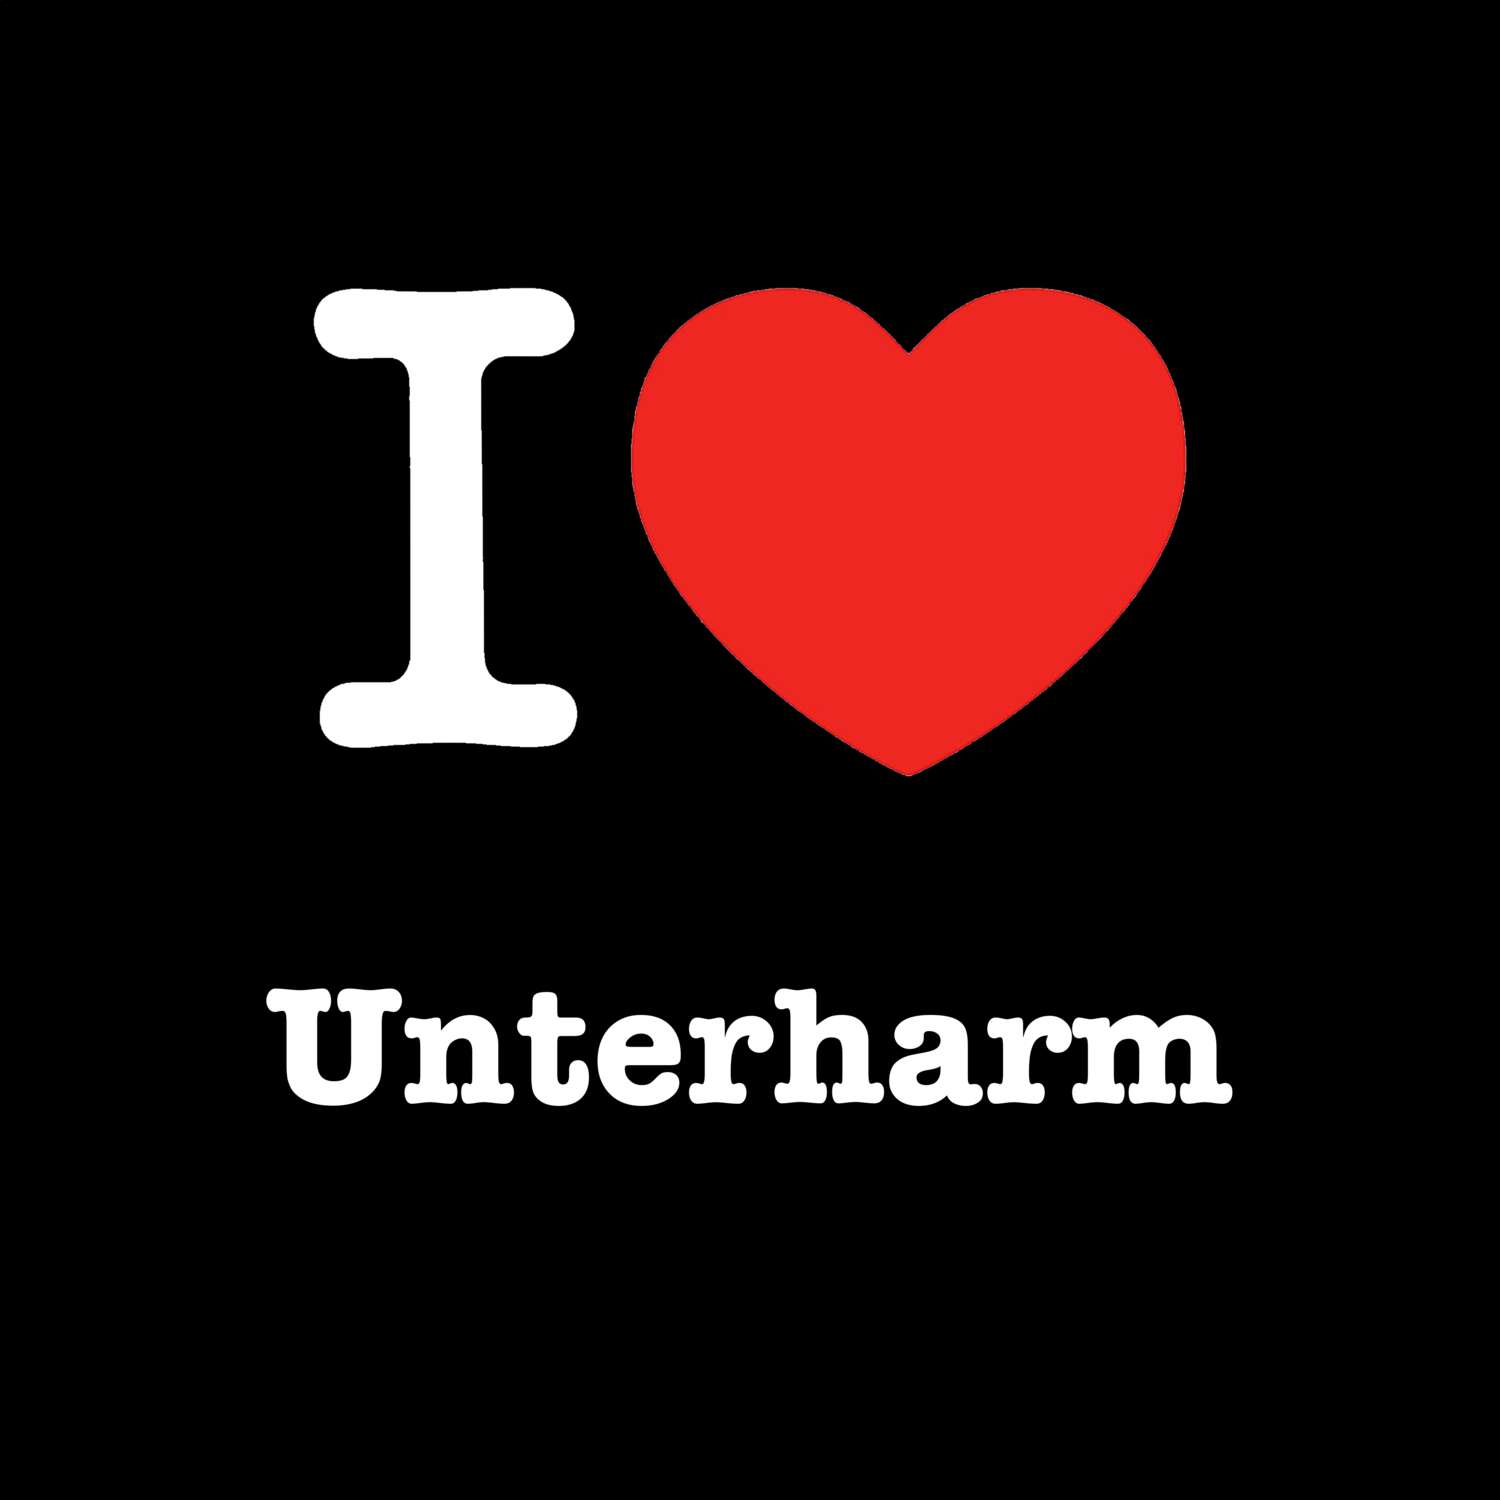 Unterharm T-Shirt »I love«